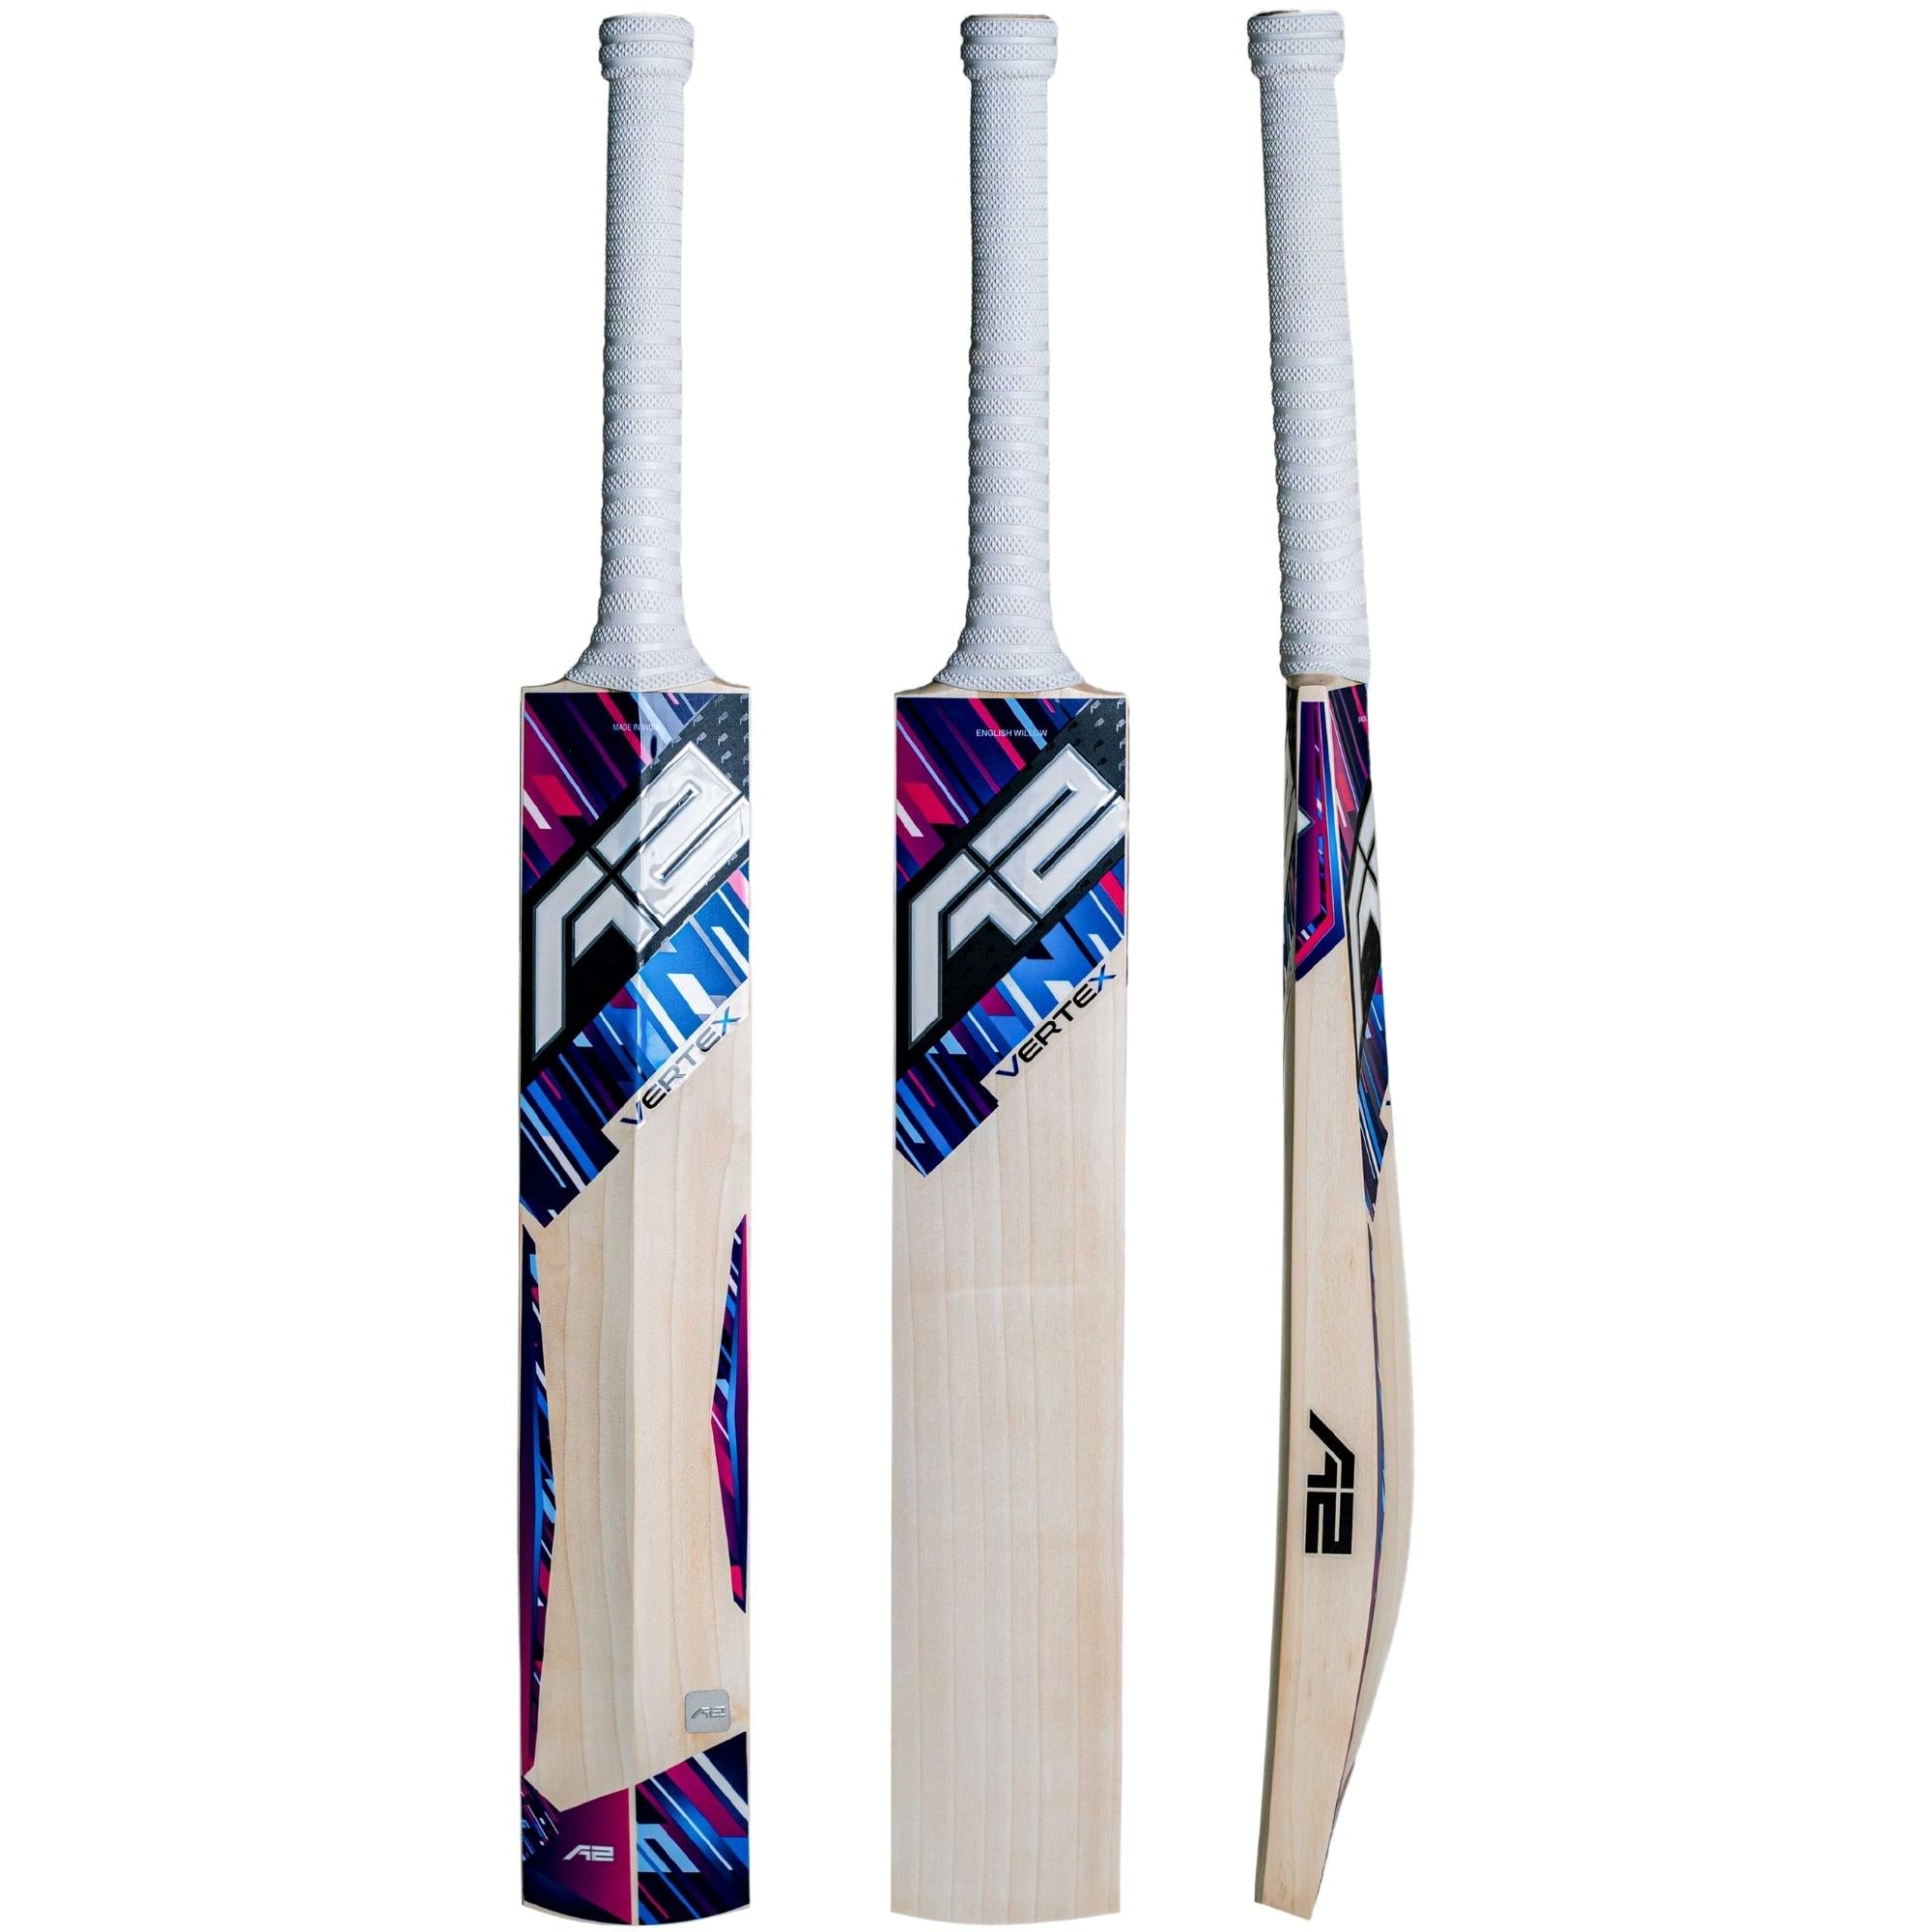 A2 Vertex Grade-2 English Willow Cricket Bat